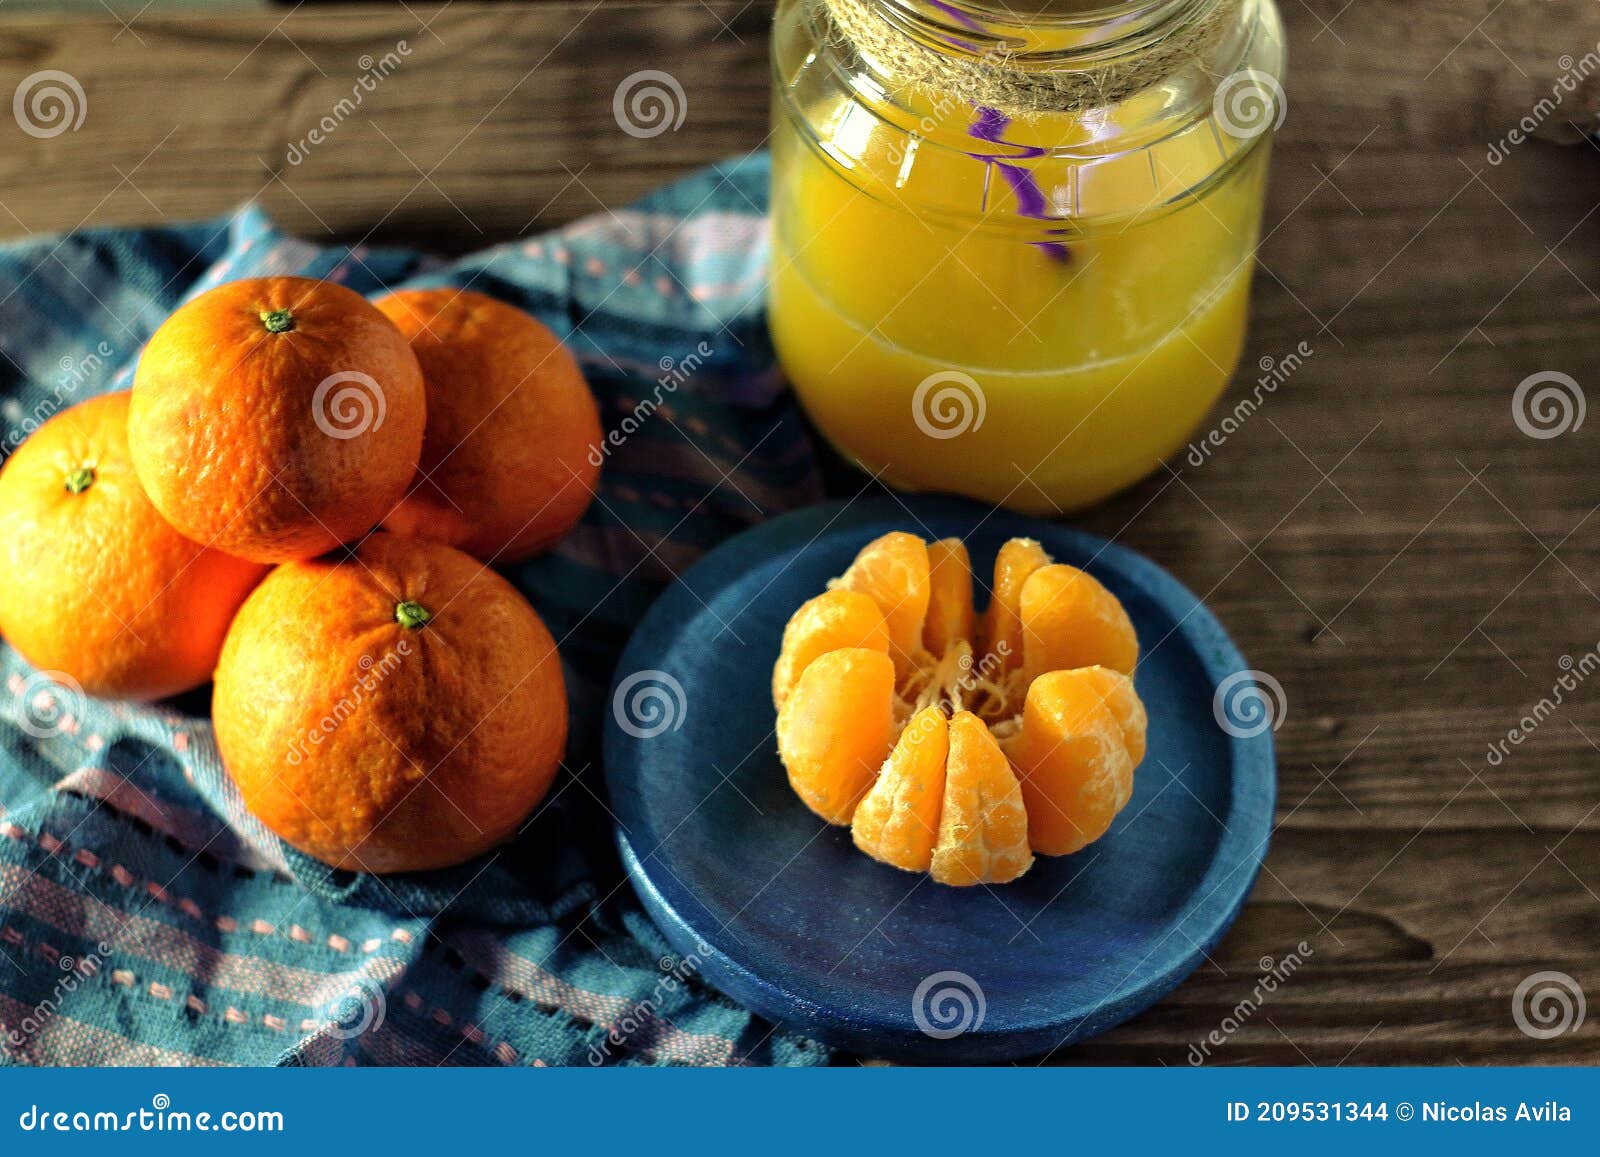 mandarins and glass jar with juice